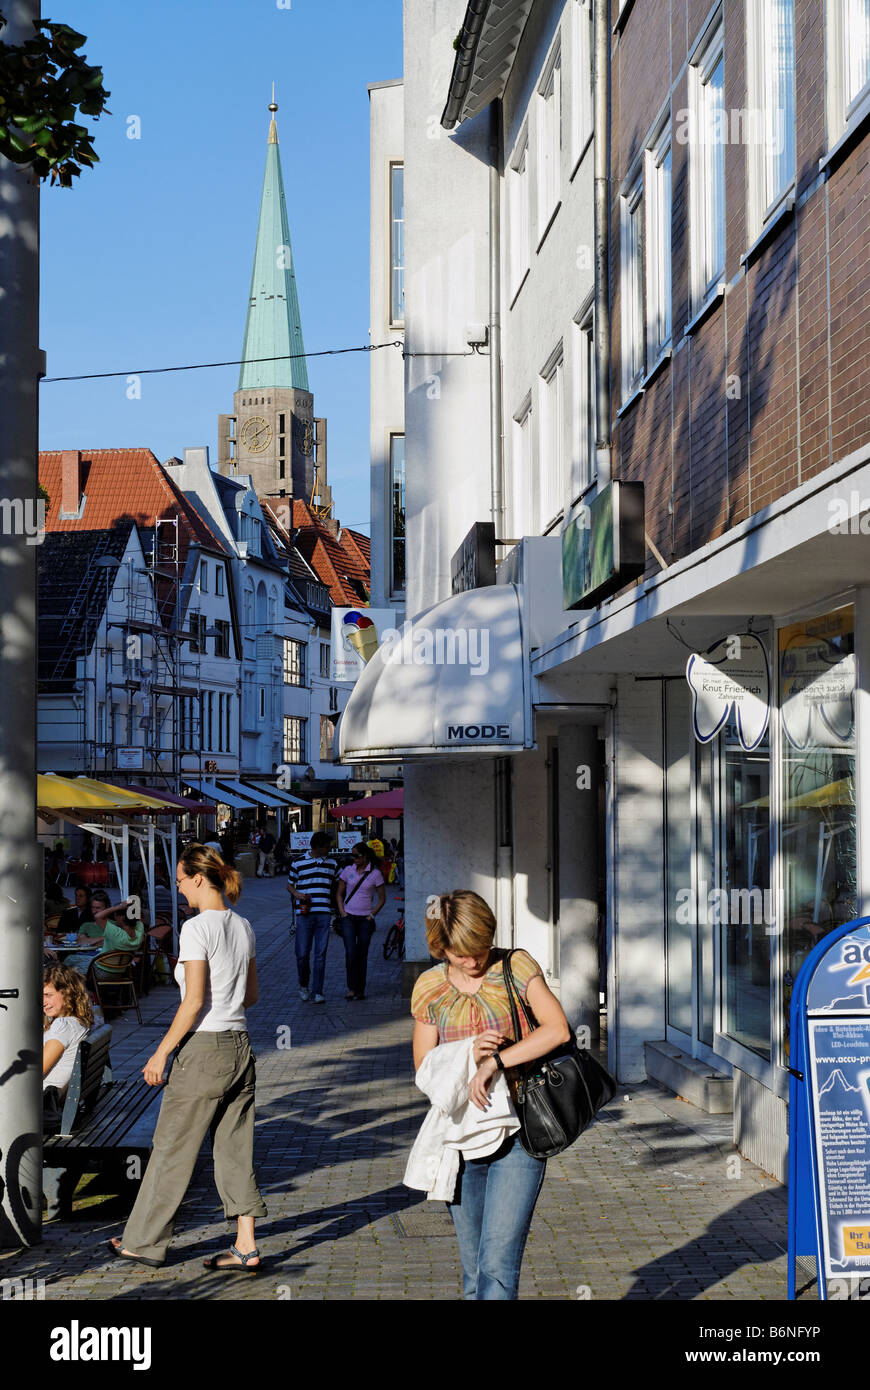 Street scene of the old town Bielefeld Germany Stock Photo